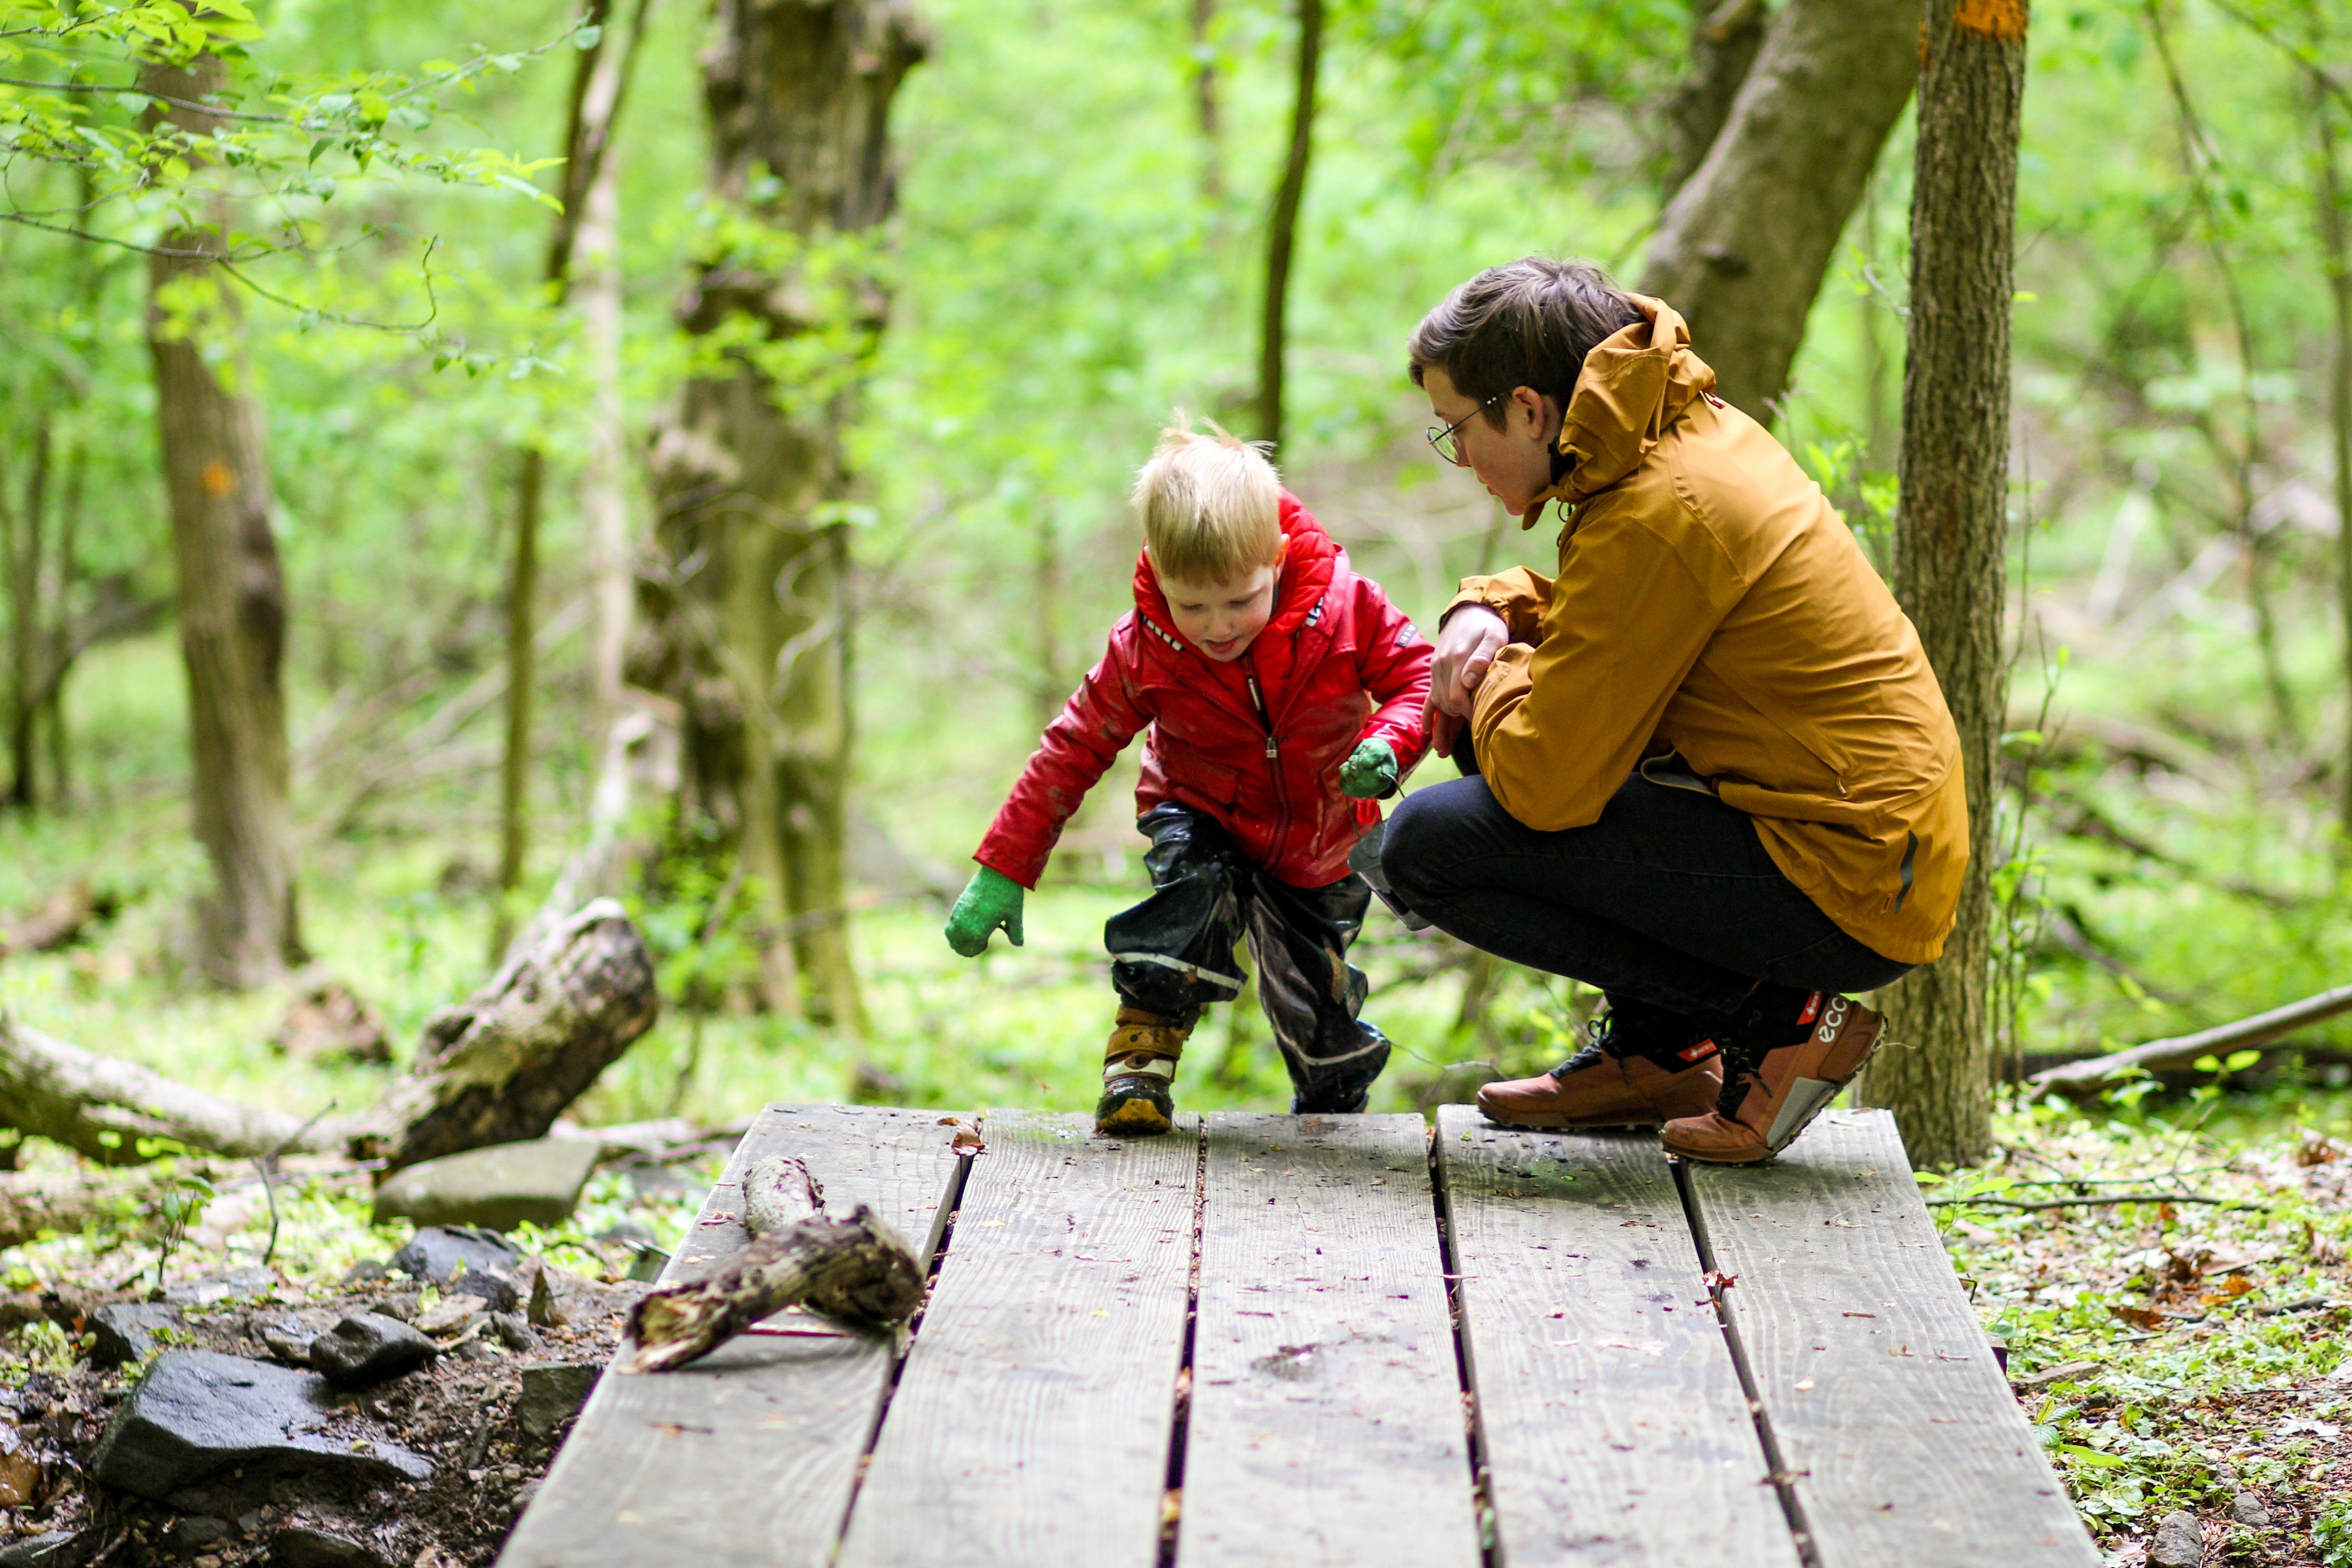 An adult helps a child step up onto a wooden platform